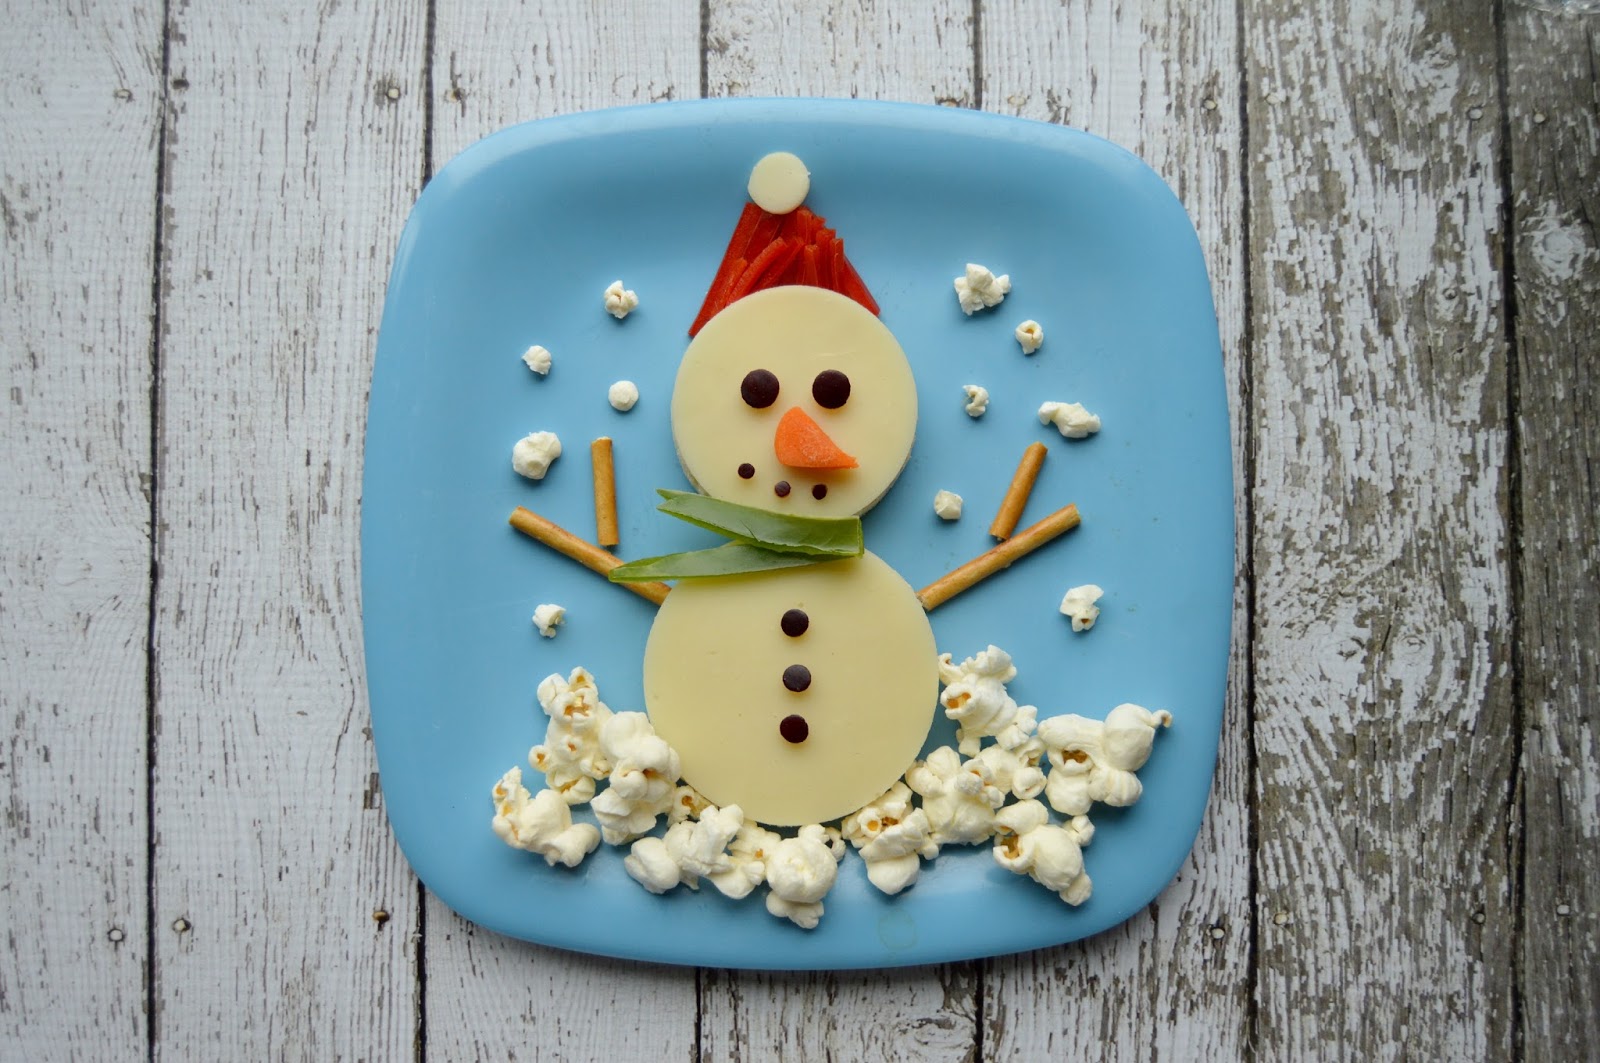 Creative Food: Snowman Lunch for #GivingTuesday!